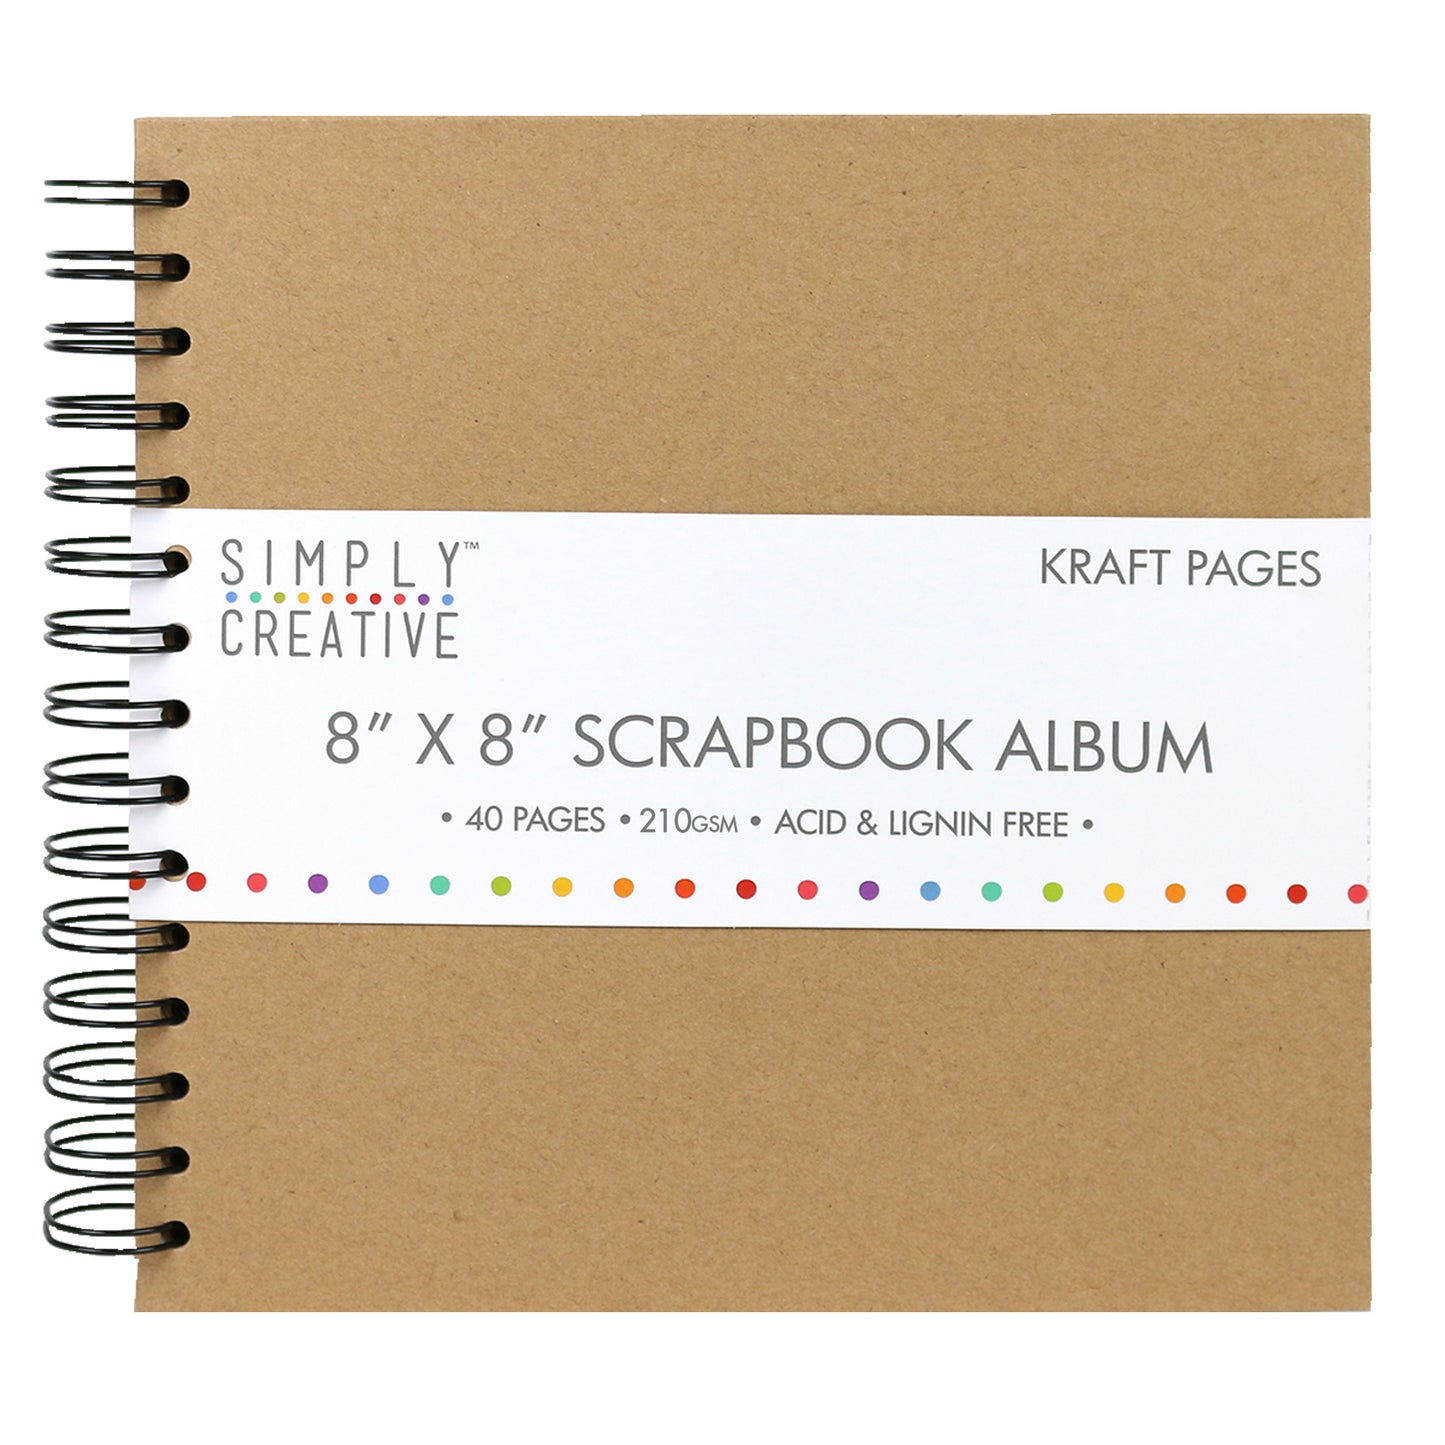 Simply Creative Album 8x8 - Plain Kraft